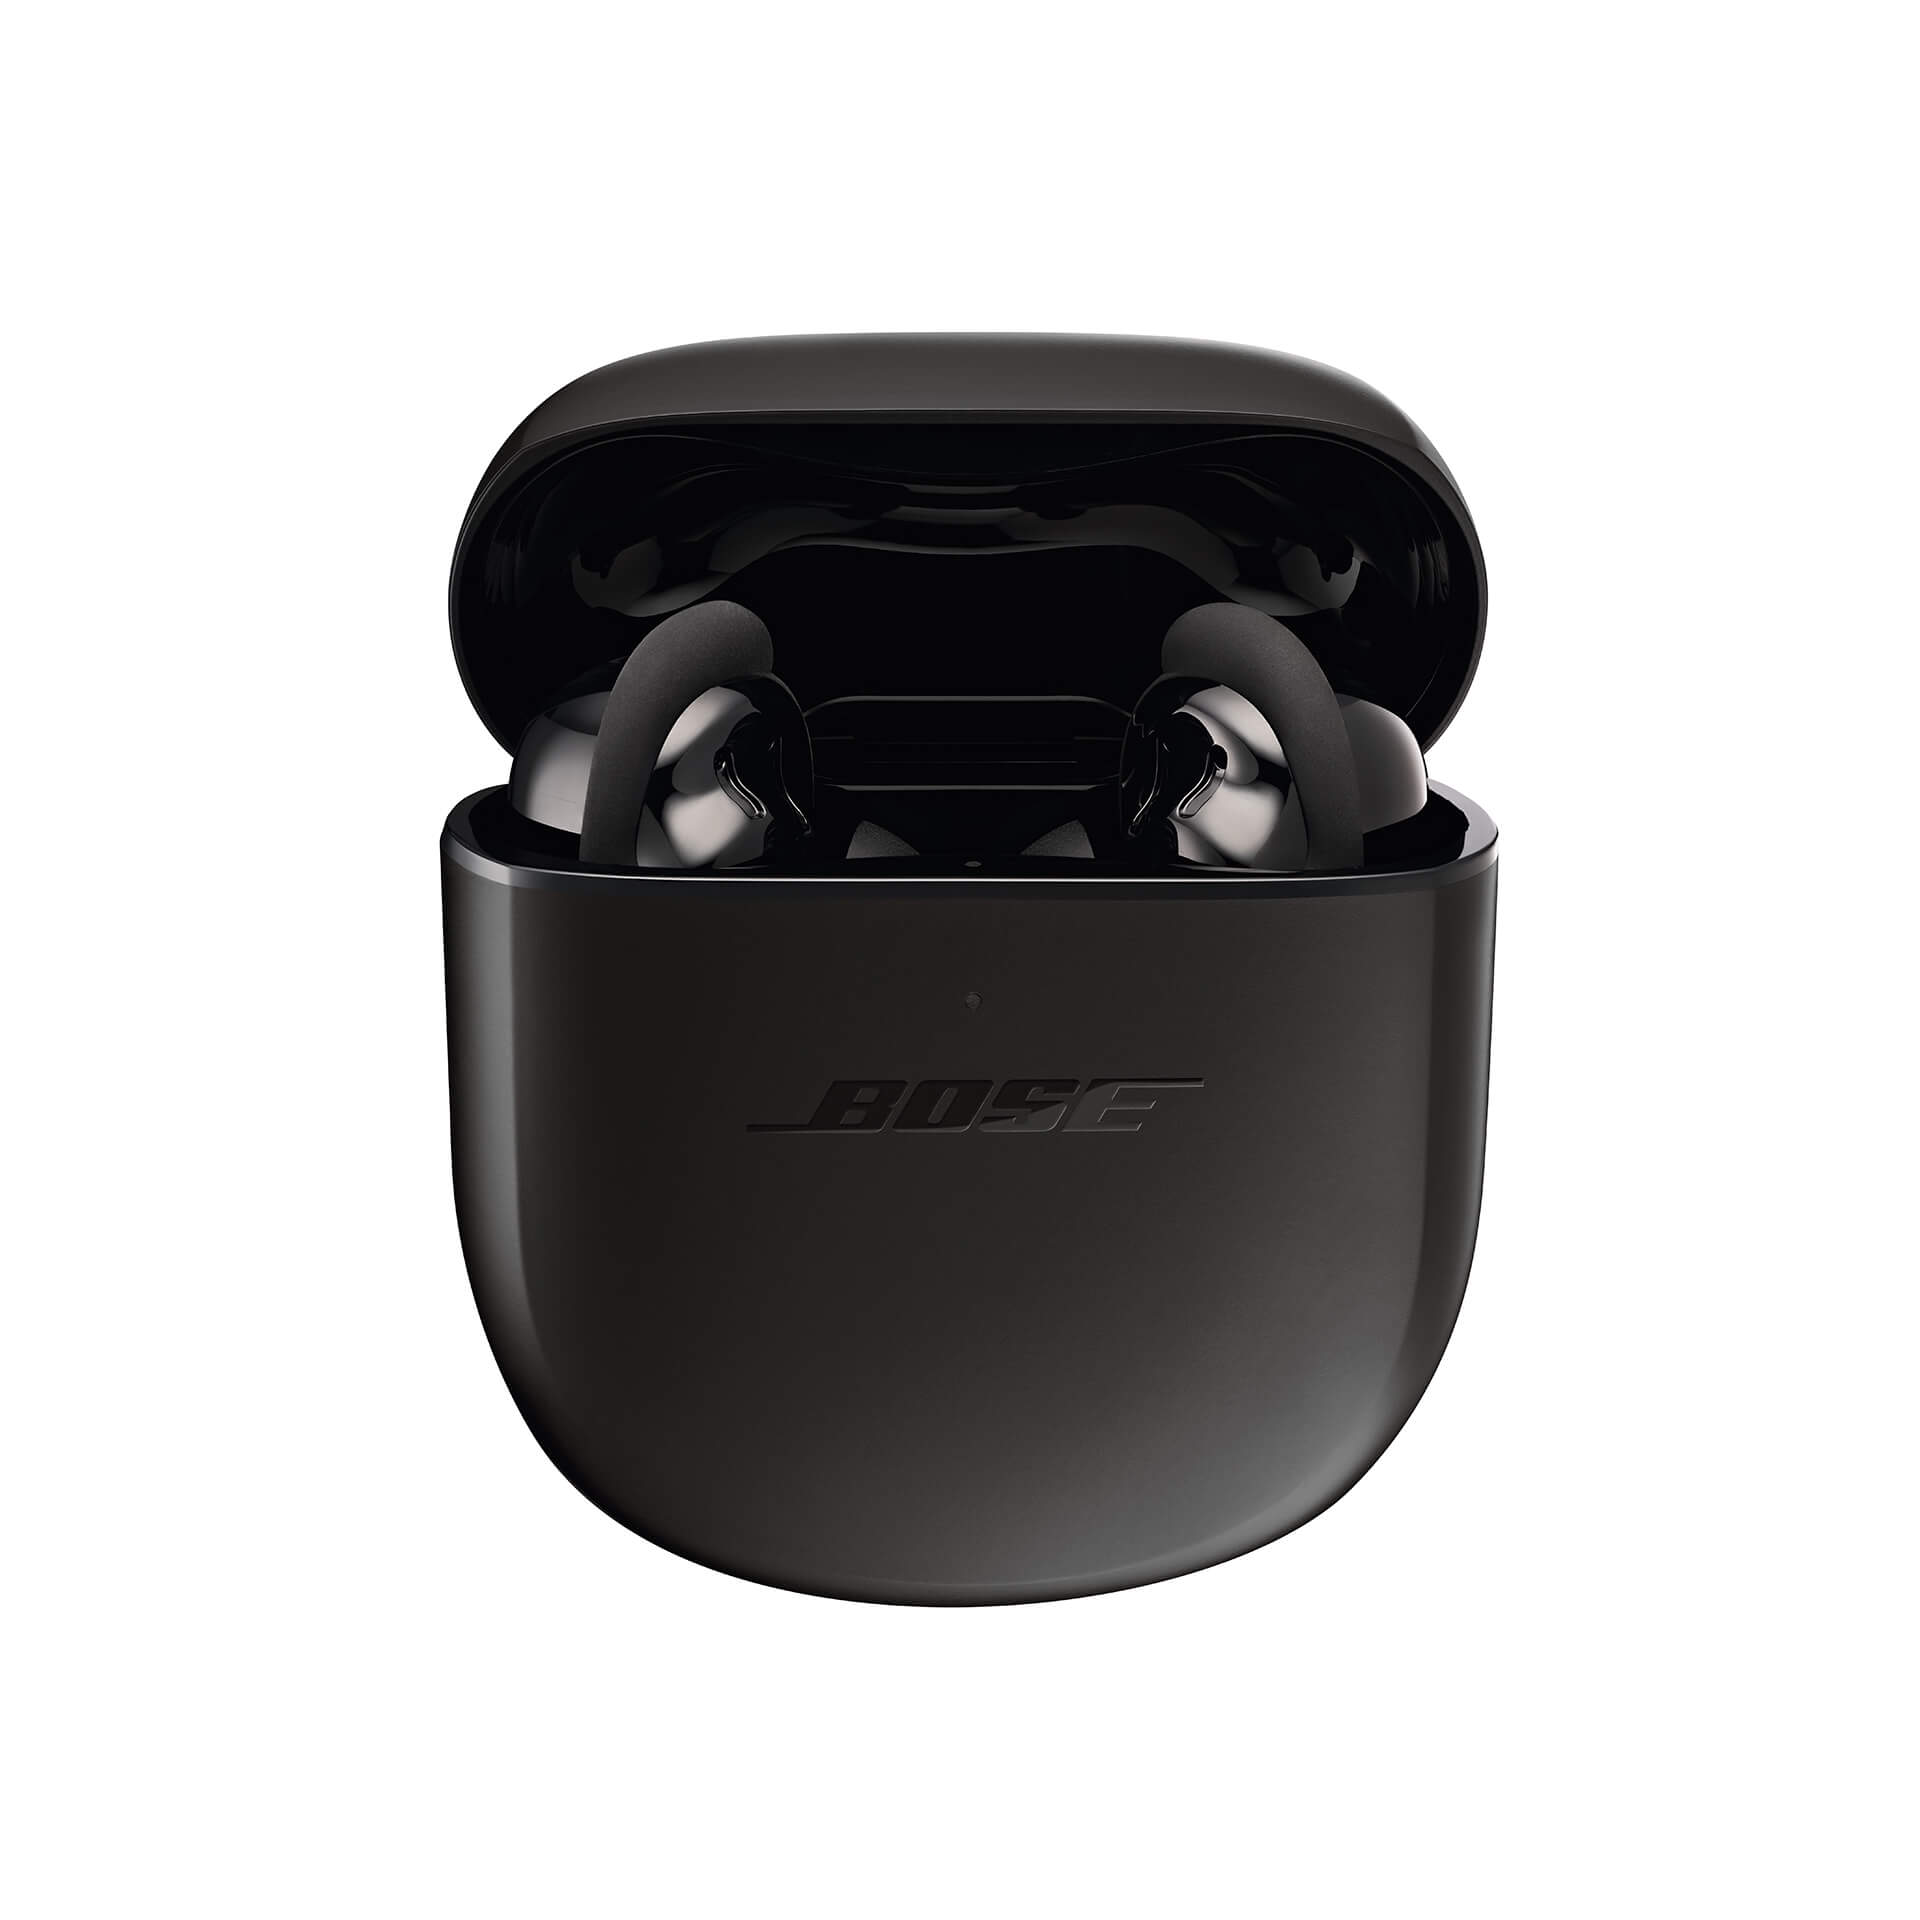 Bose QuietComfort Earbuds vorgestellt: Dank Technologie die weltbeste Geräuschunterdrückung? - kopfhoerer.de